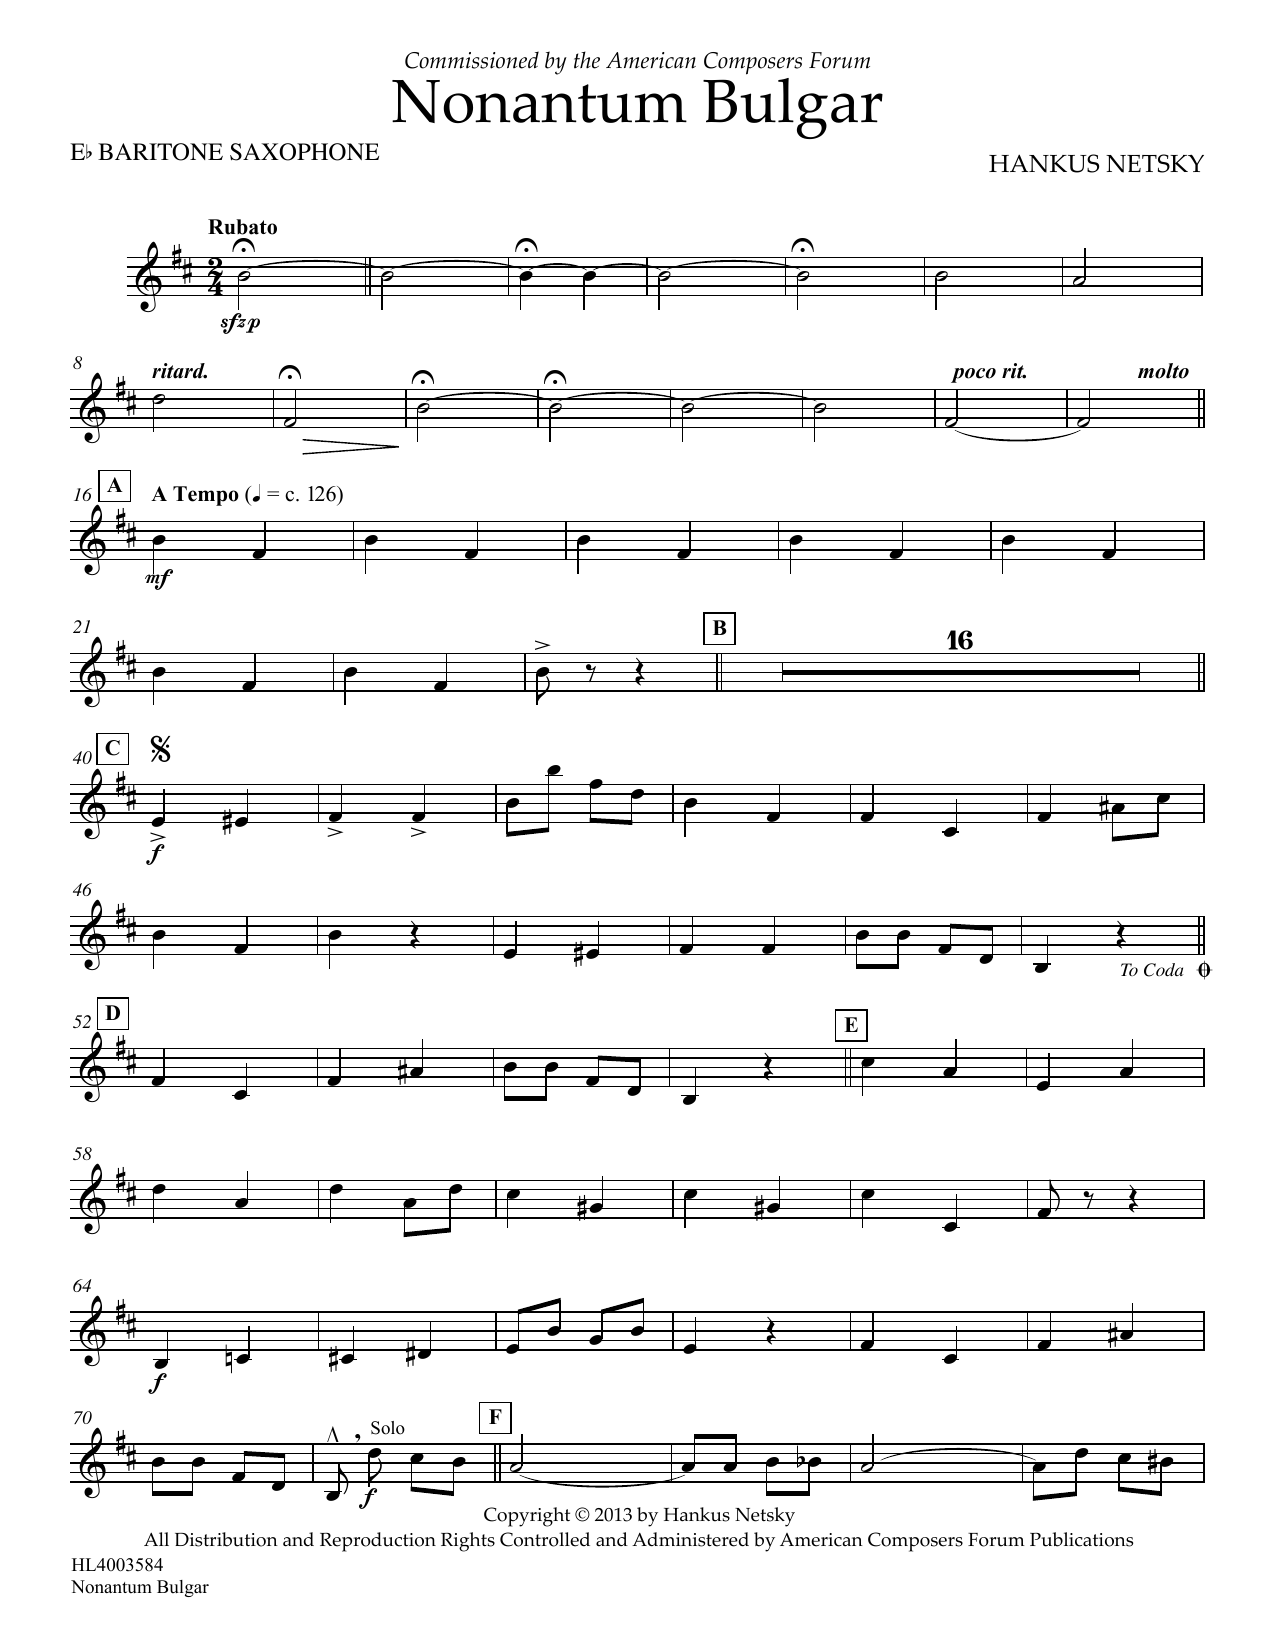 Download Hankus Netsky Nonantum Bulgar - Eb Baritone Saxophone Sheet Music